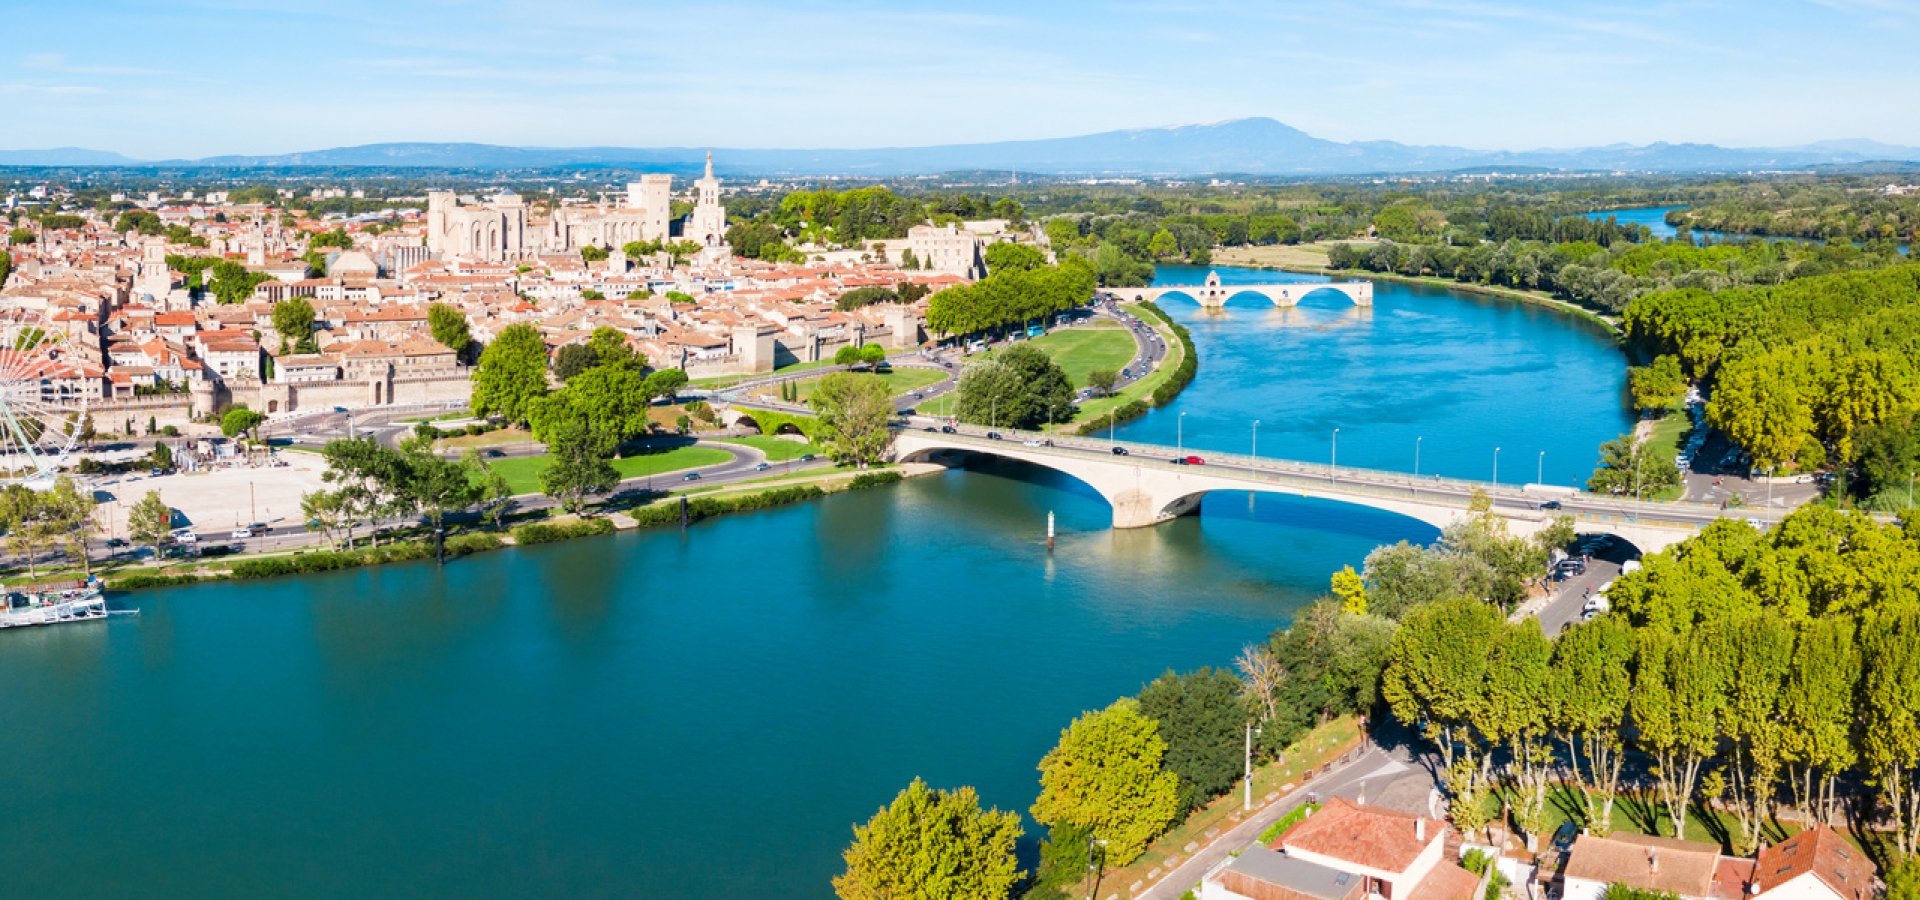 Avignon-City-and-River-1800x600.jpg